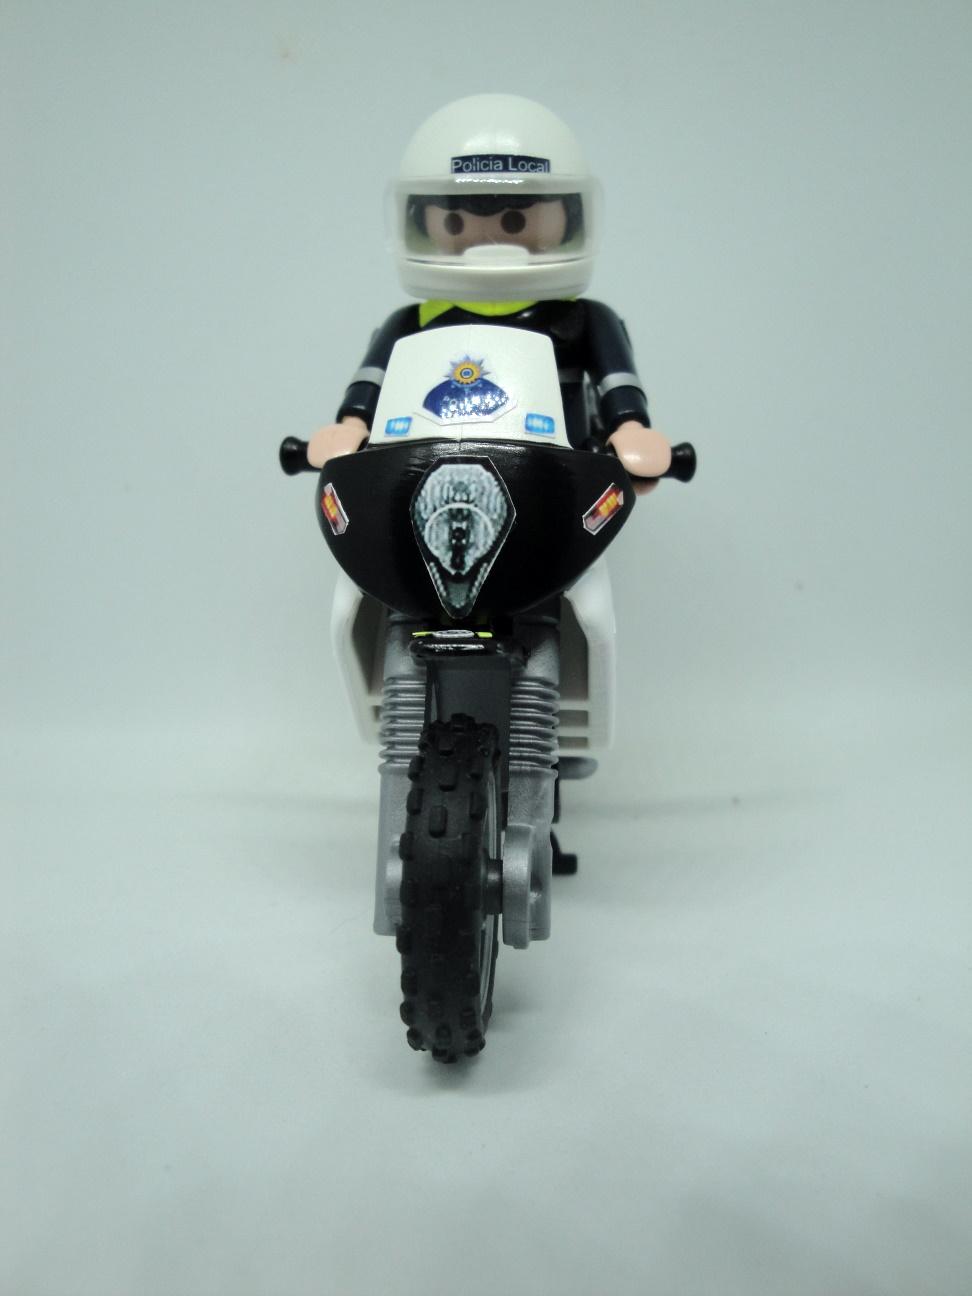 Playmobil personalizado Policía Local Vitoria patrulla con moto elige hombre o mujer